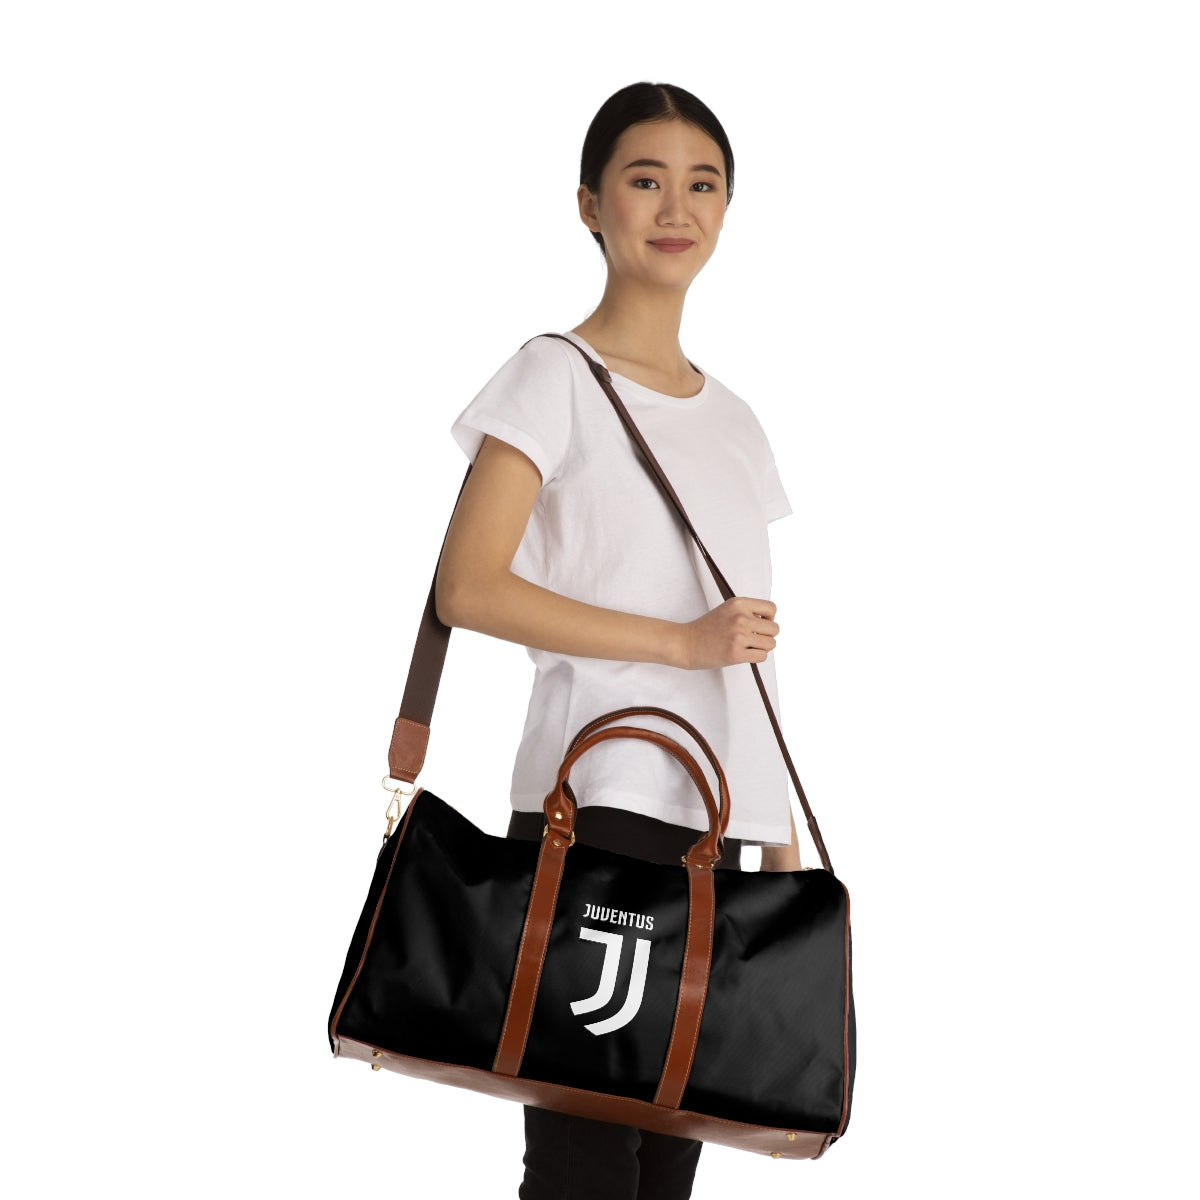 Juventus Waterproof Travel Bag